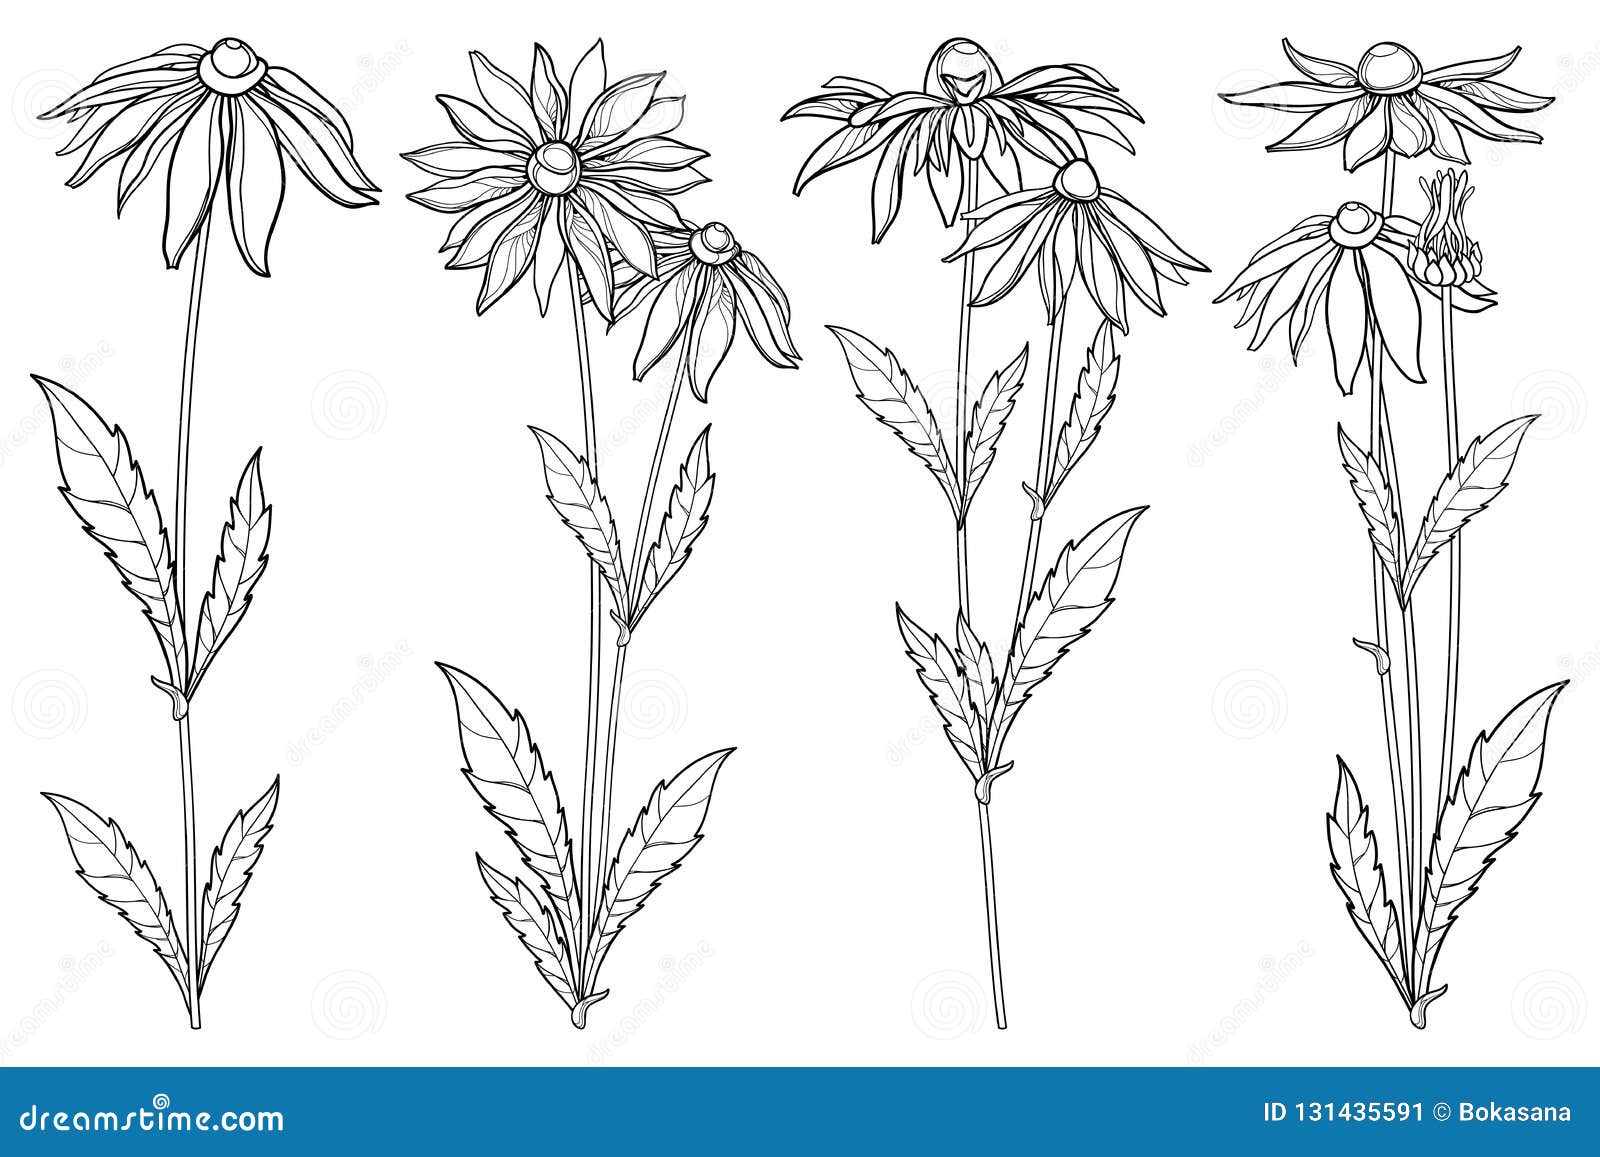  set with outline rudbeckia hirta or black-eyed susan flower bunch, ornate leaf and bud in black  on white back.